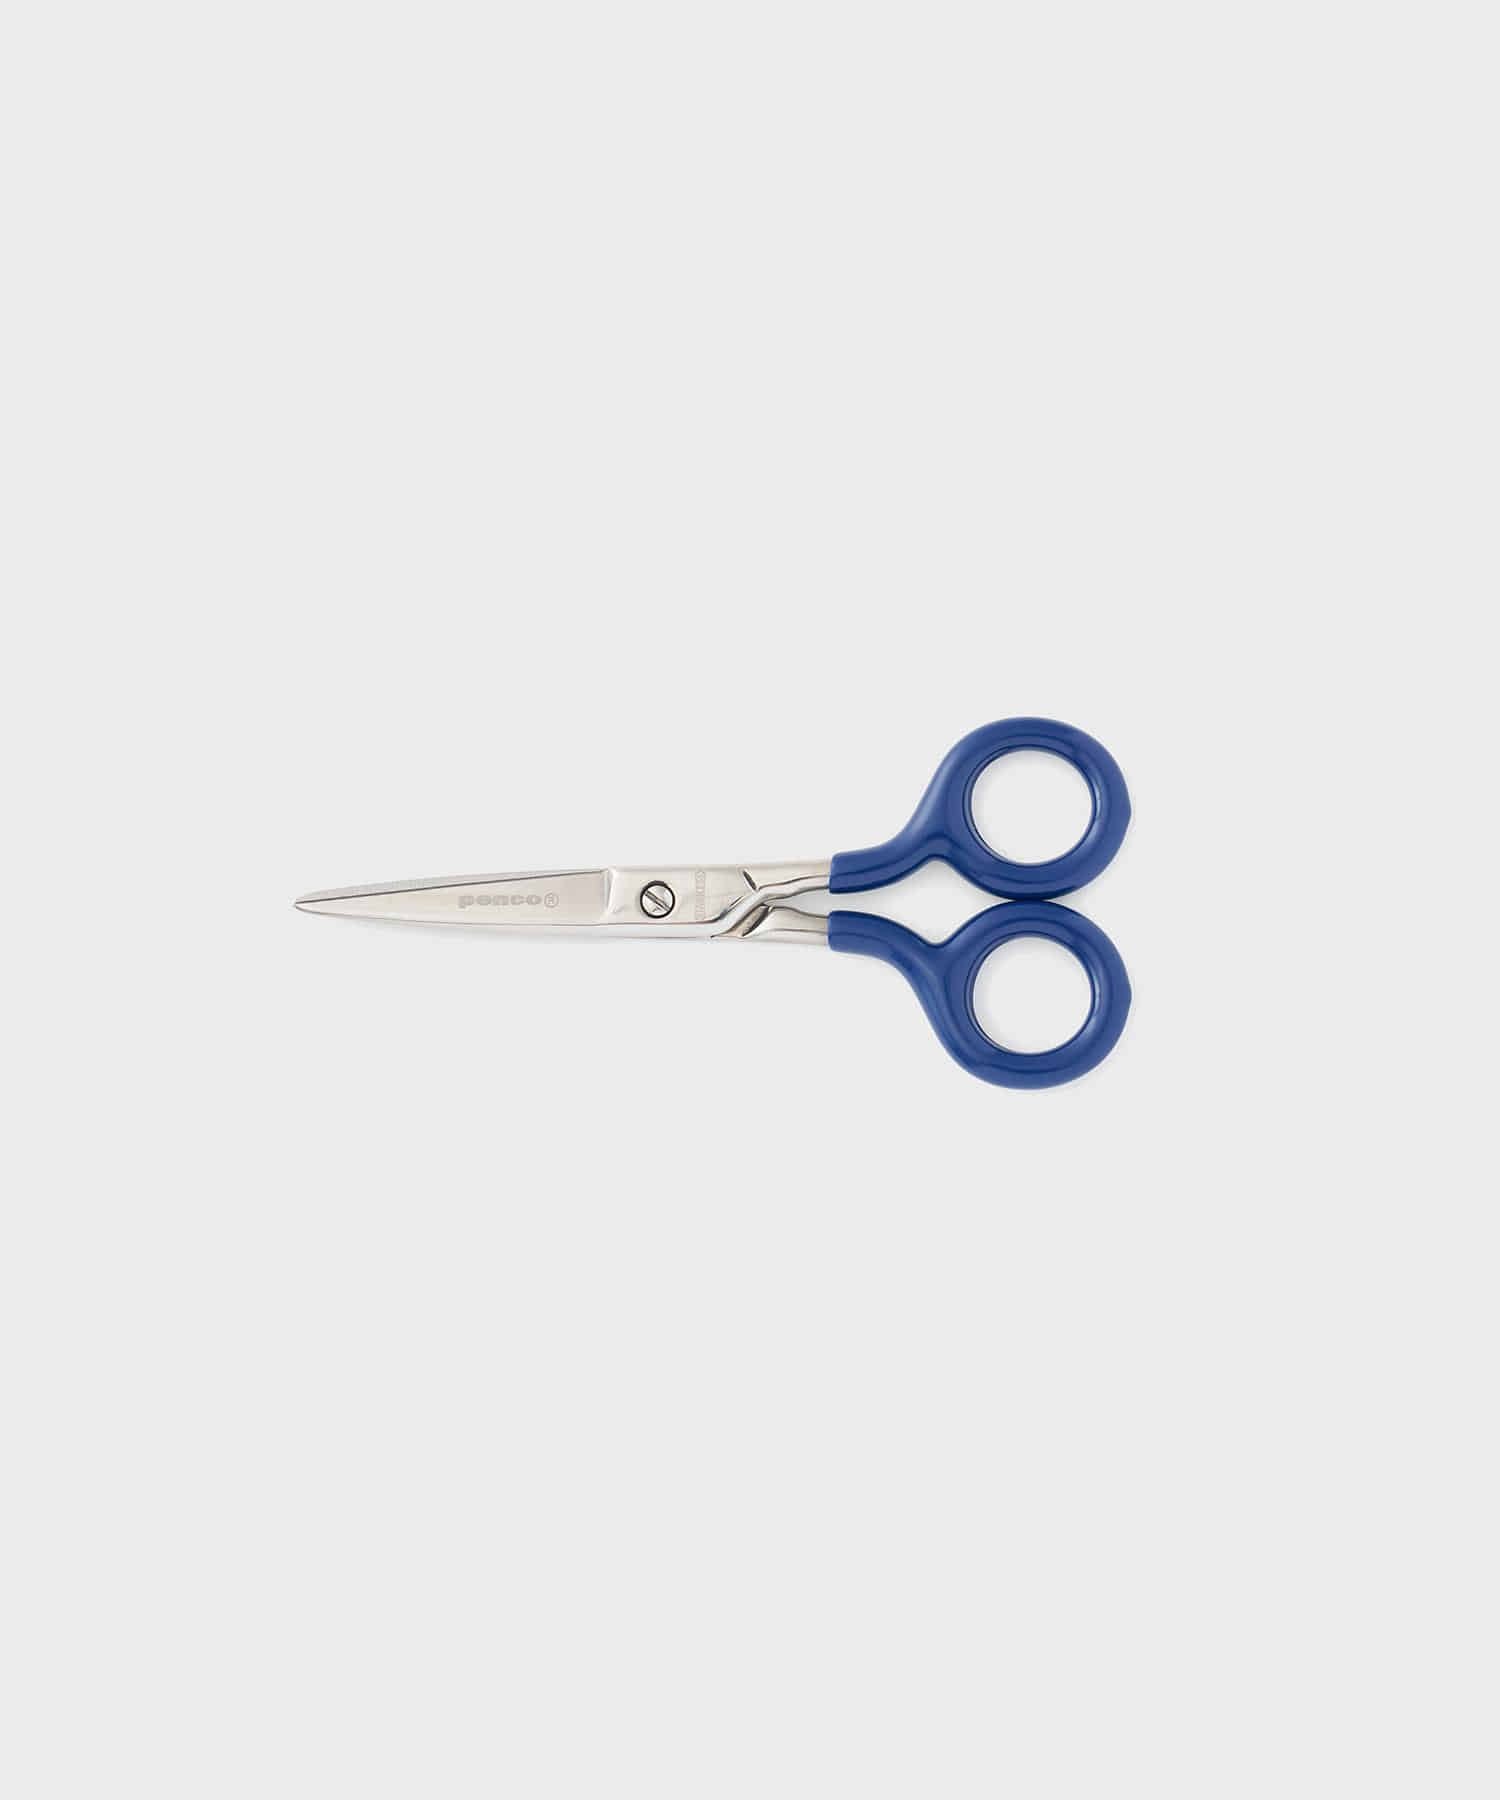 Penco Stainless Scissors (Navy)